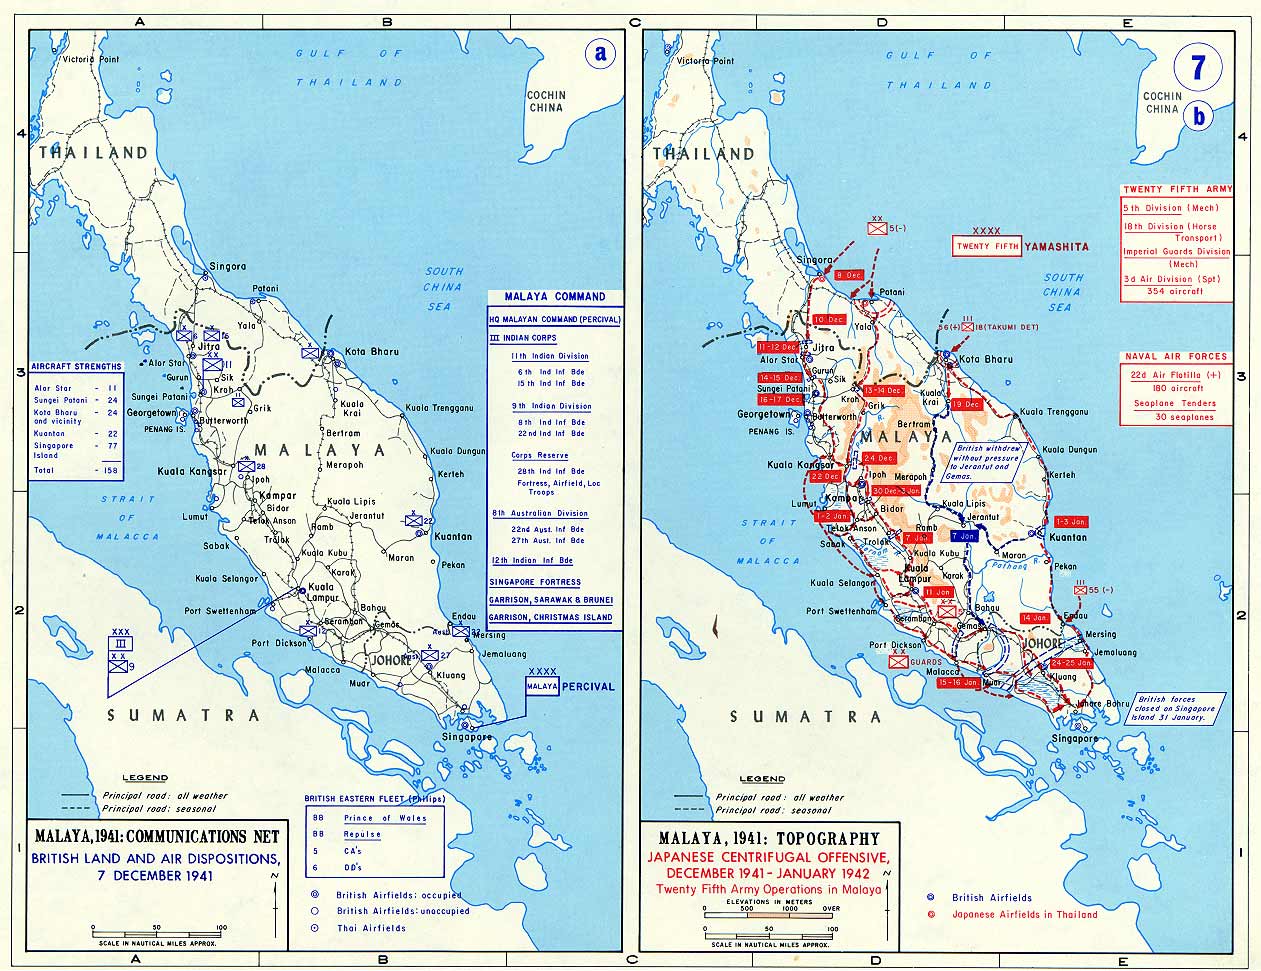 Malaya Command: 8th December 1941 Malaya Command Land Forces in Malaya